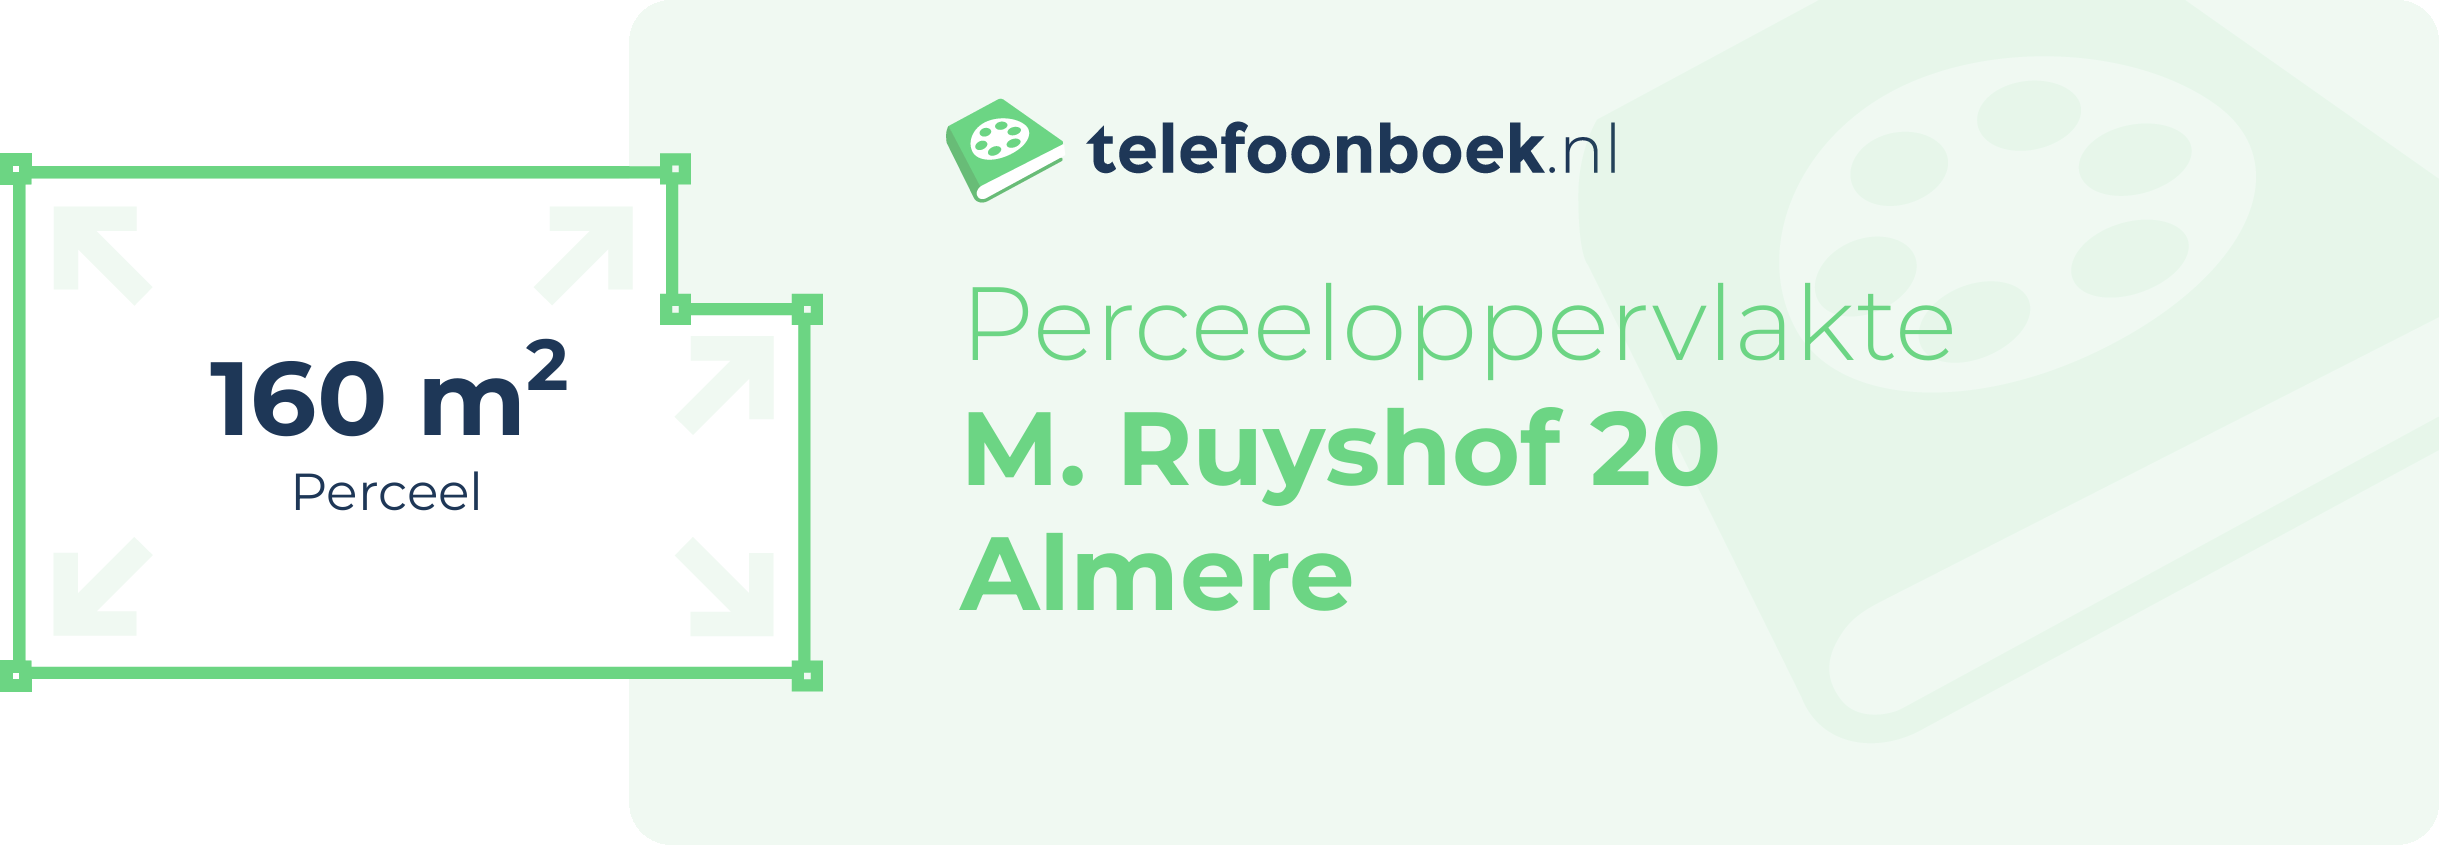 Perceeloppervlakte M. Ruyshof 20 Almere